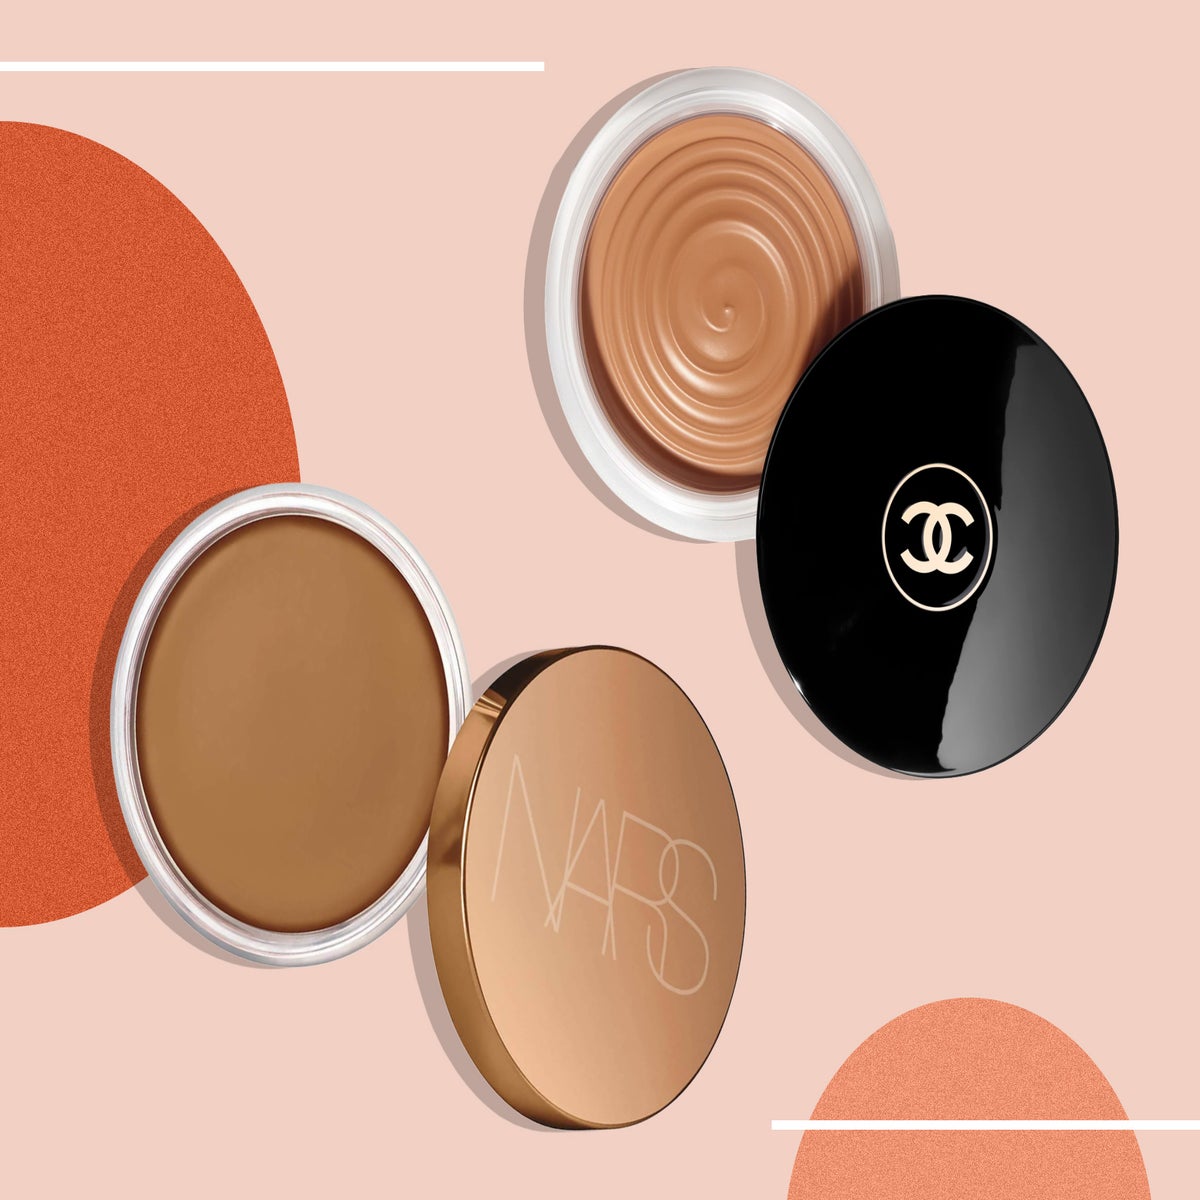 Chanel Bronzer Cream Les Beiges - Milabu Beauty Review